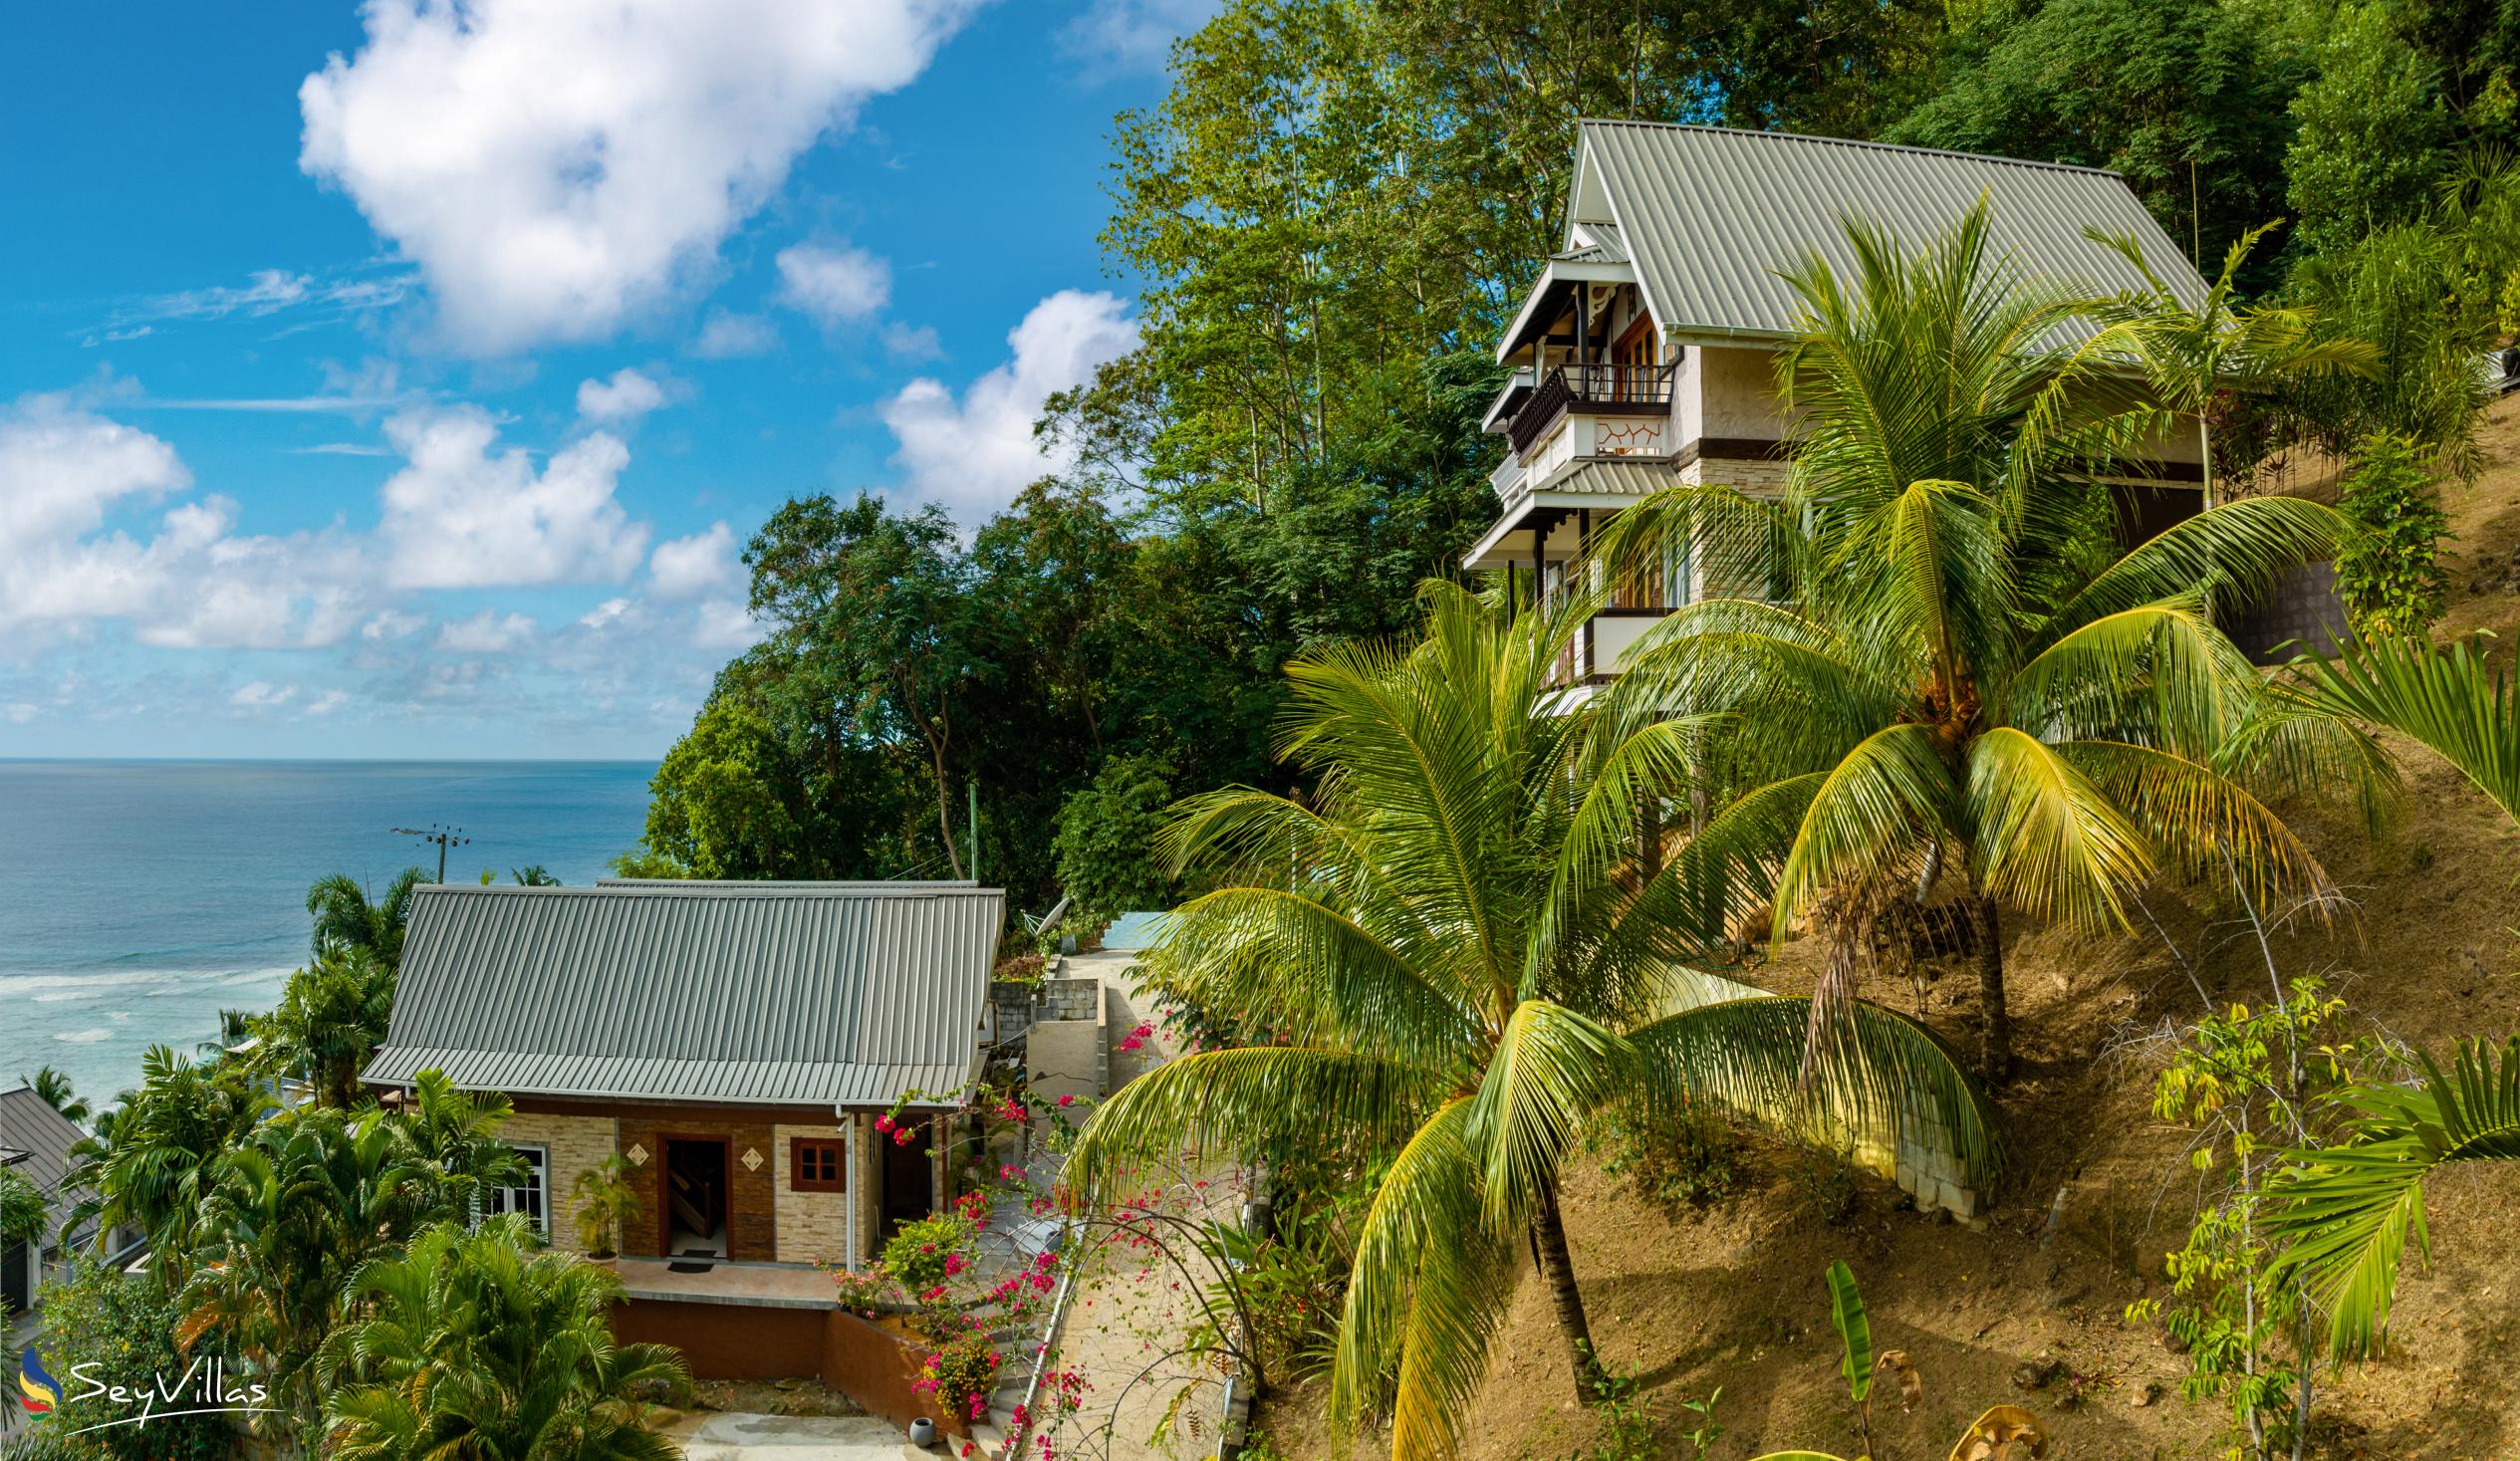 Photo 2: Mouggae Blues Villas - Outdoor area - Mahé (Seychelles)